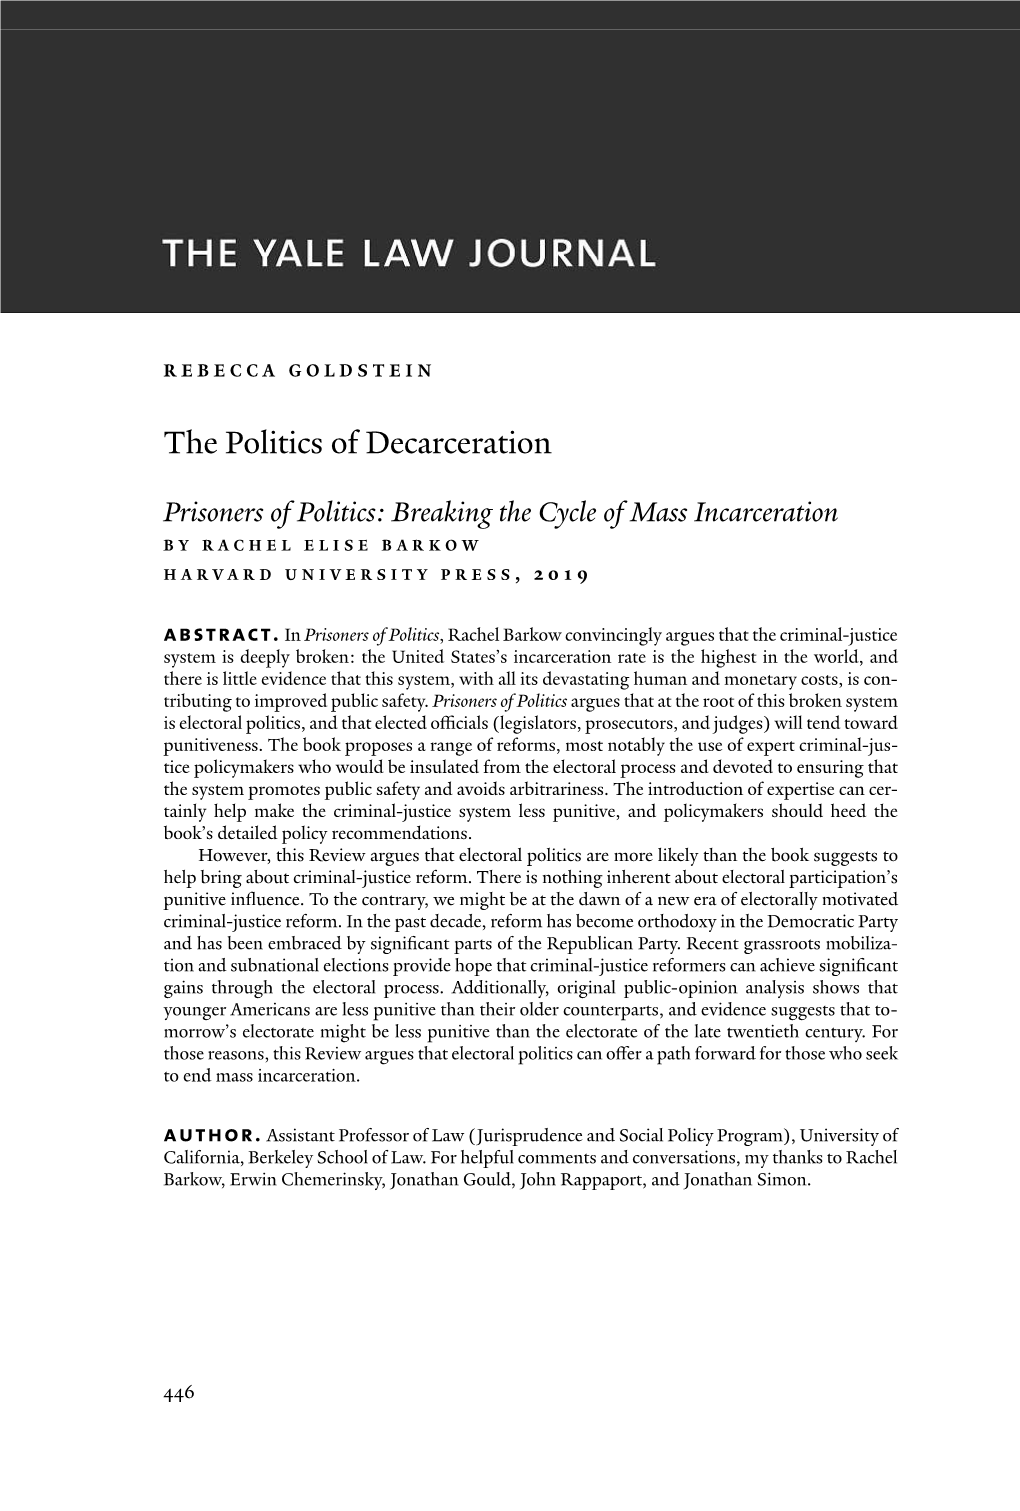 The Politics of Decarceration